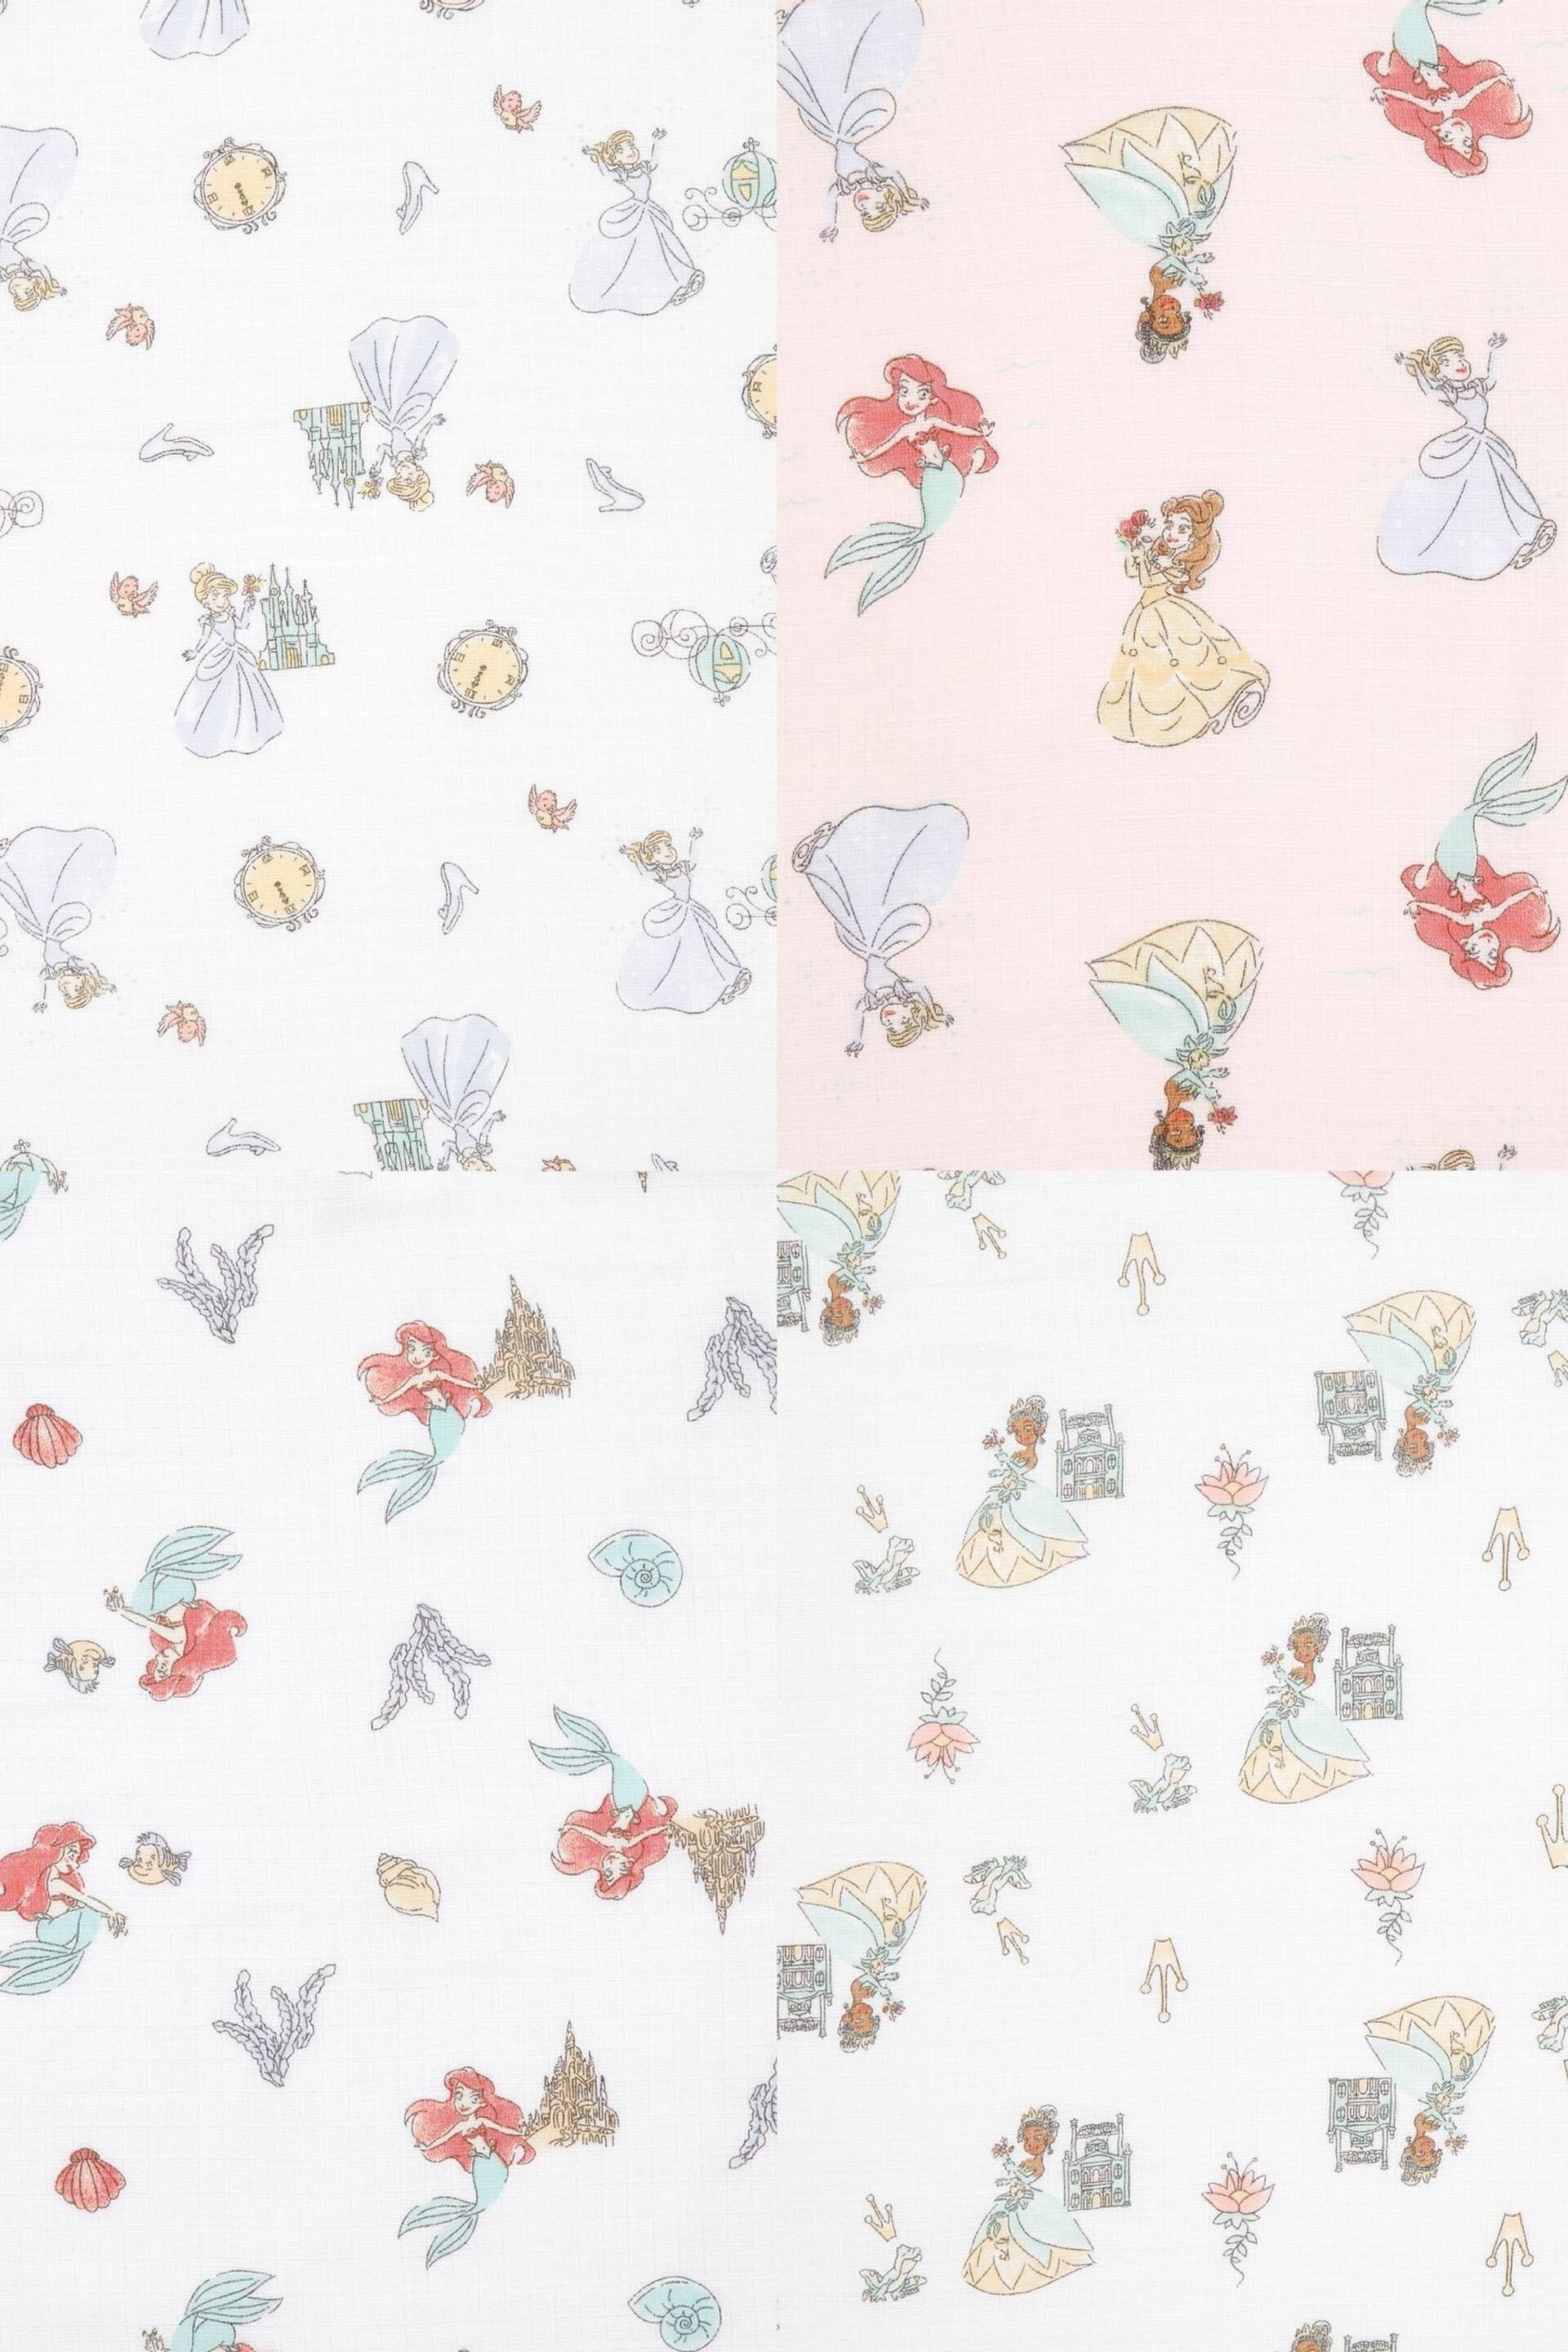 aden + anais Disney Princess Essentials Cotton Muslin Blankets 4 Pack - Image 4 of 5